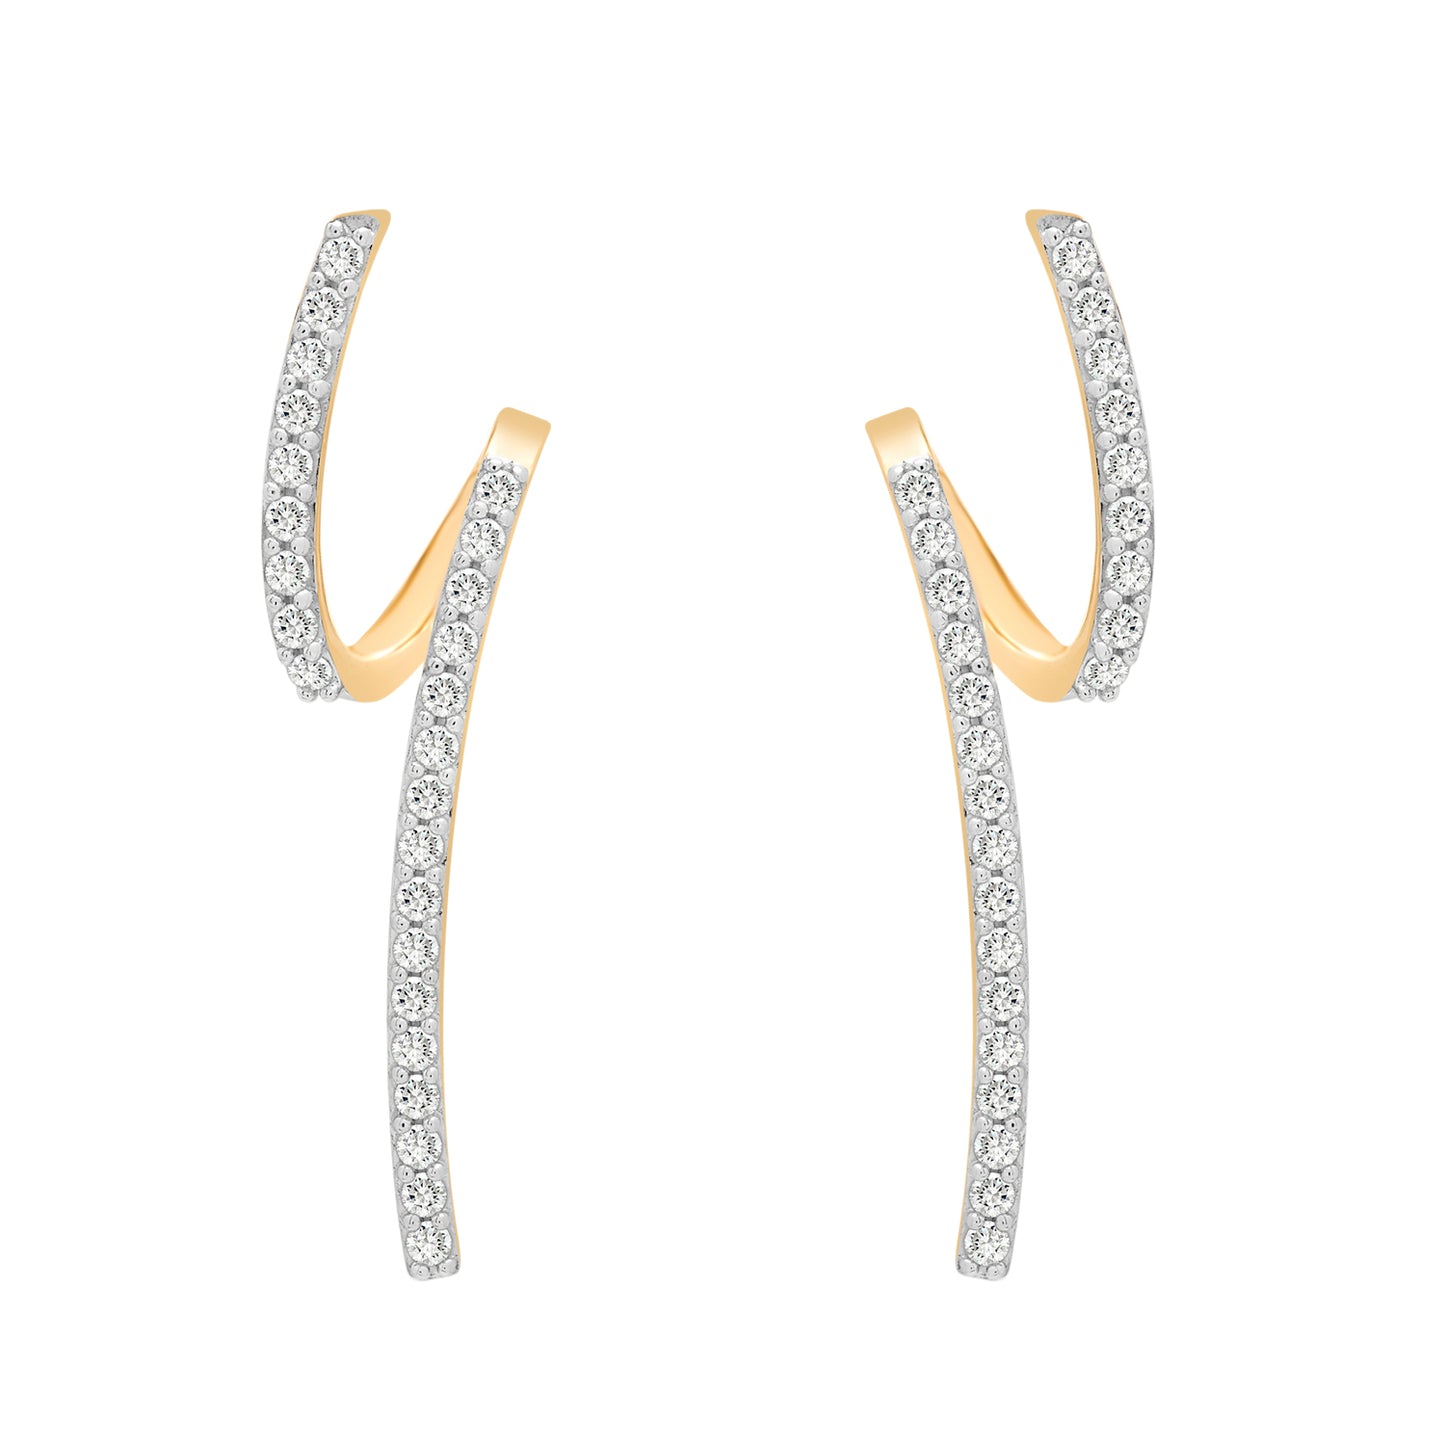 Eddi Diamond Free Form Earrings With Gold Coated